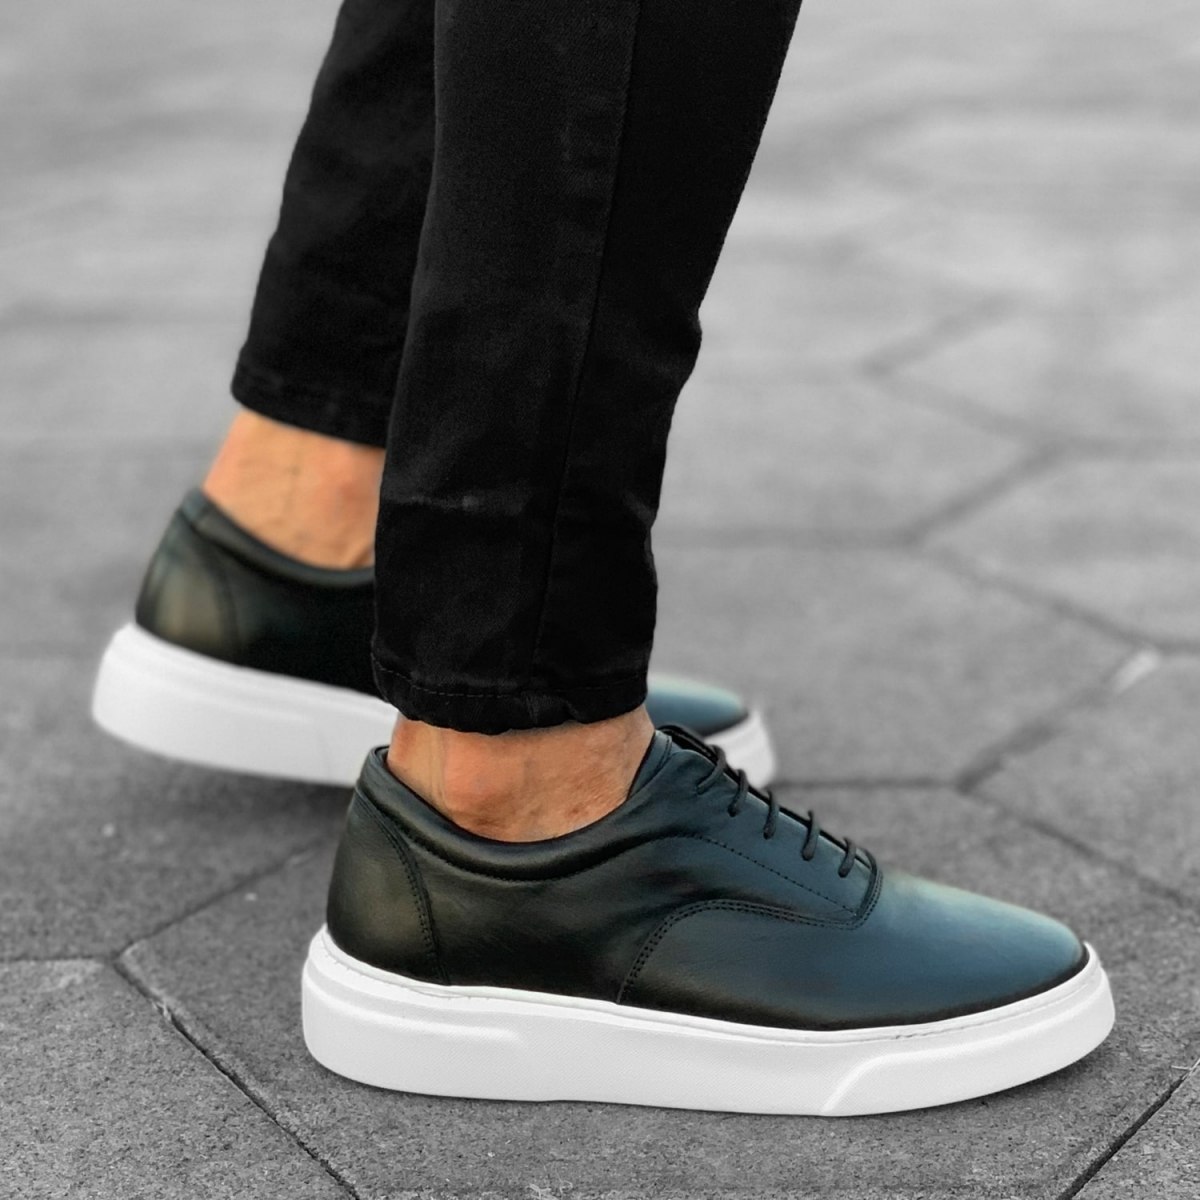 Men's Leather Sneakers Shoes Black-White | Martin Valen